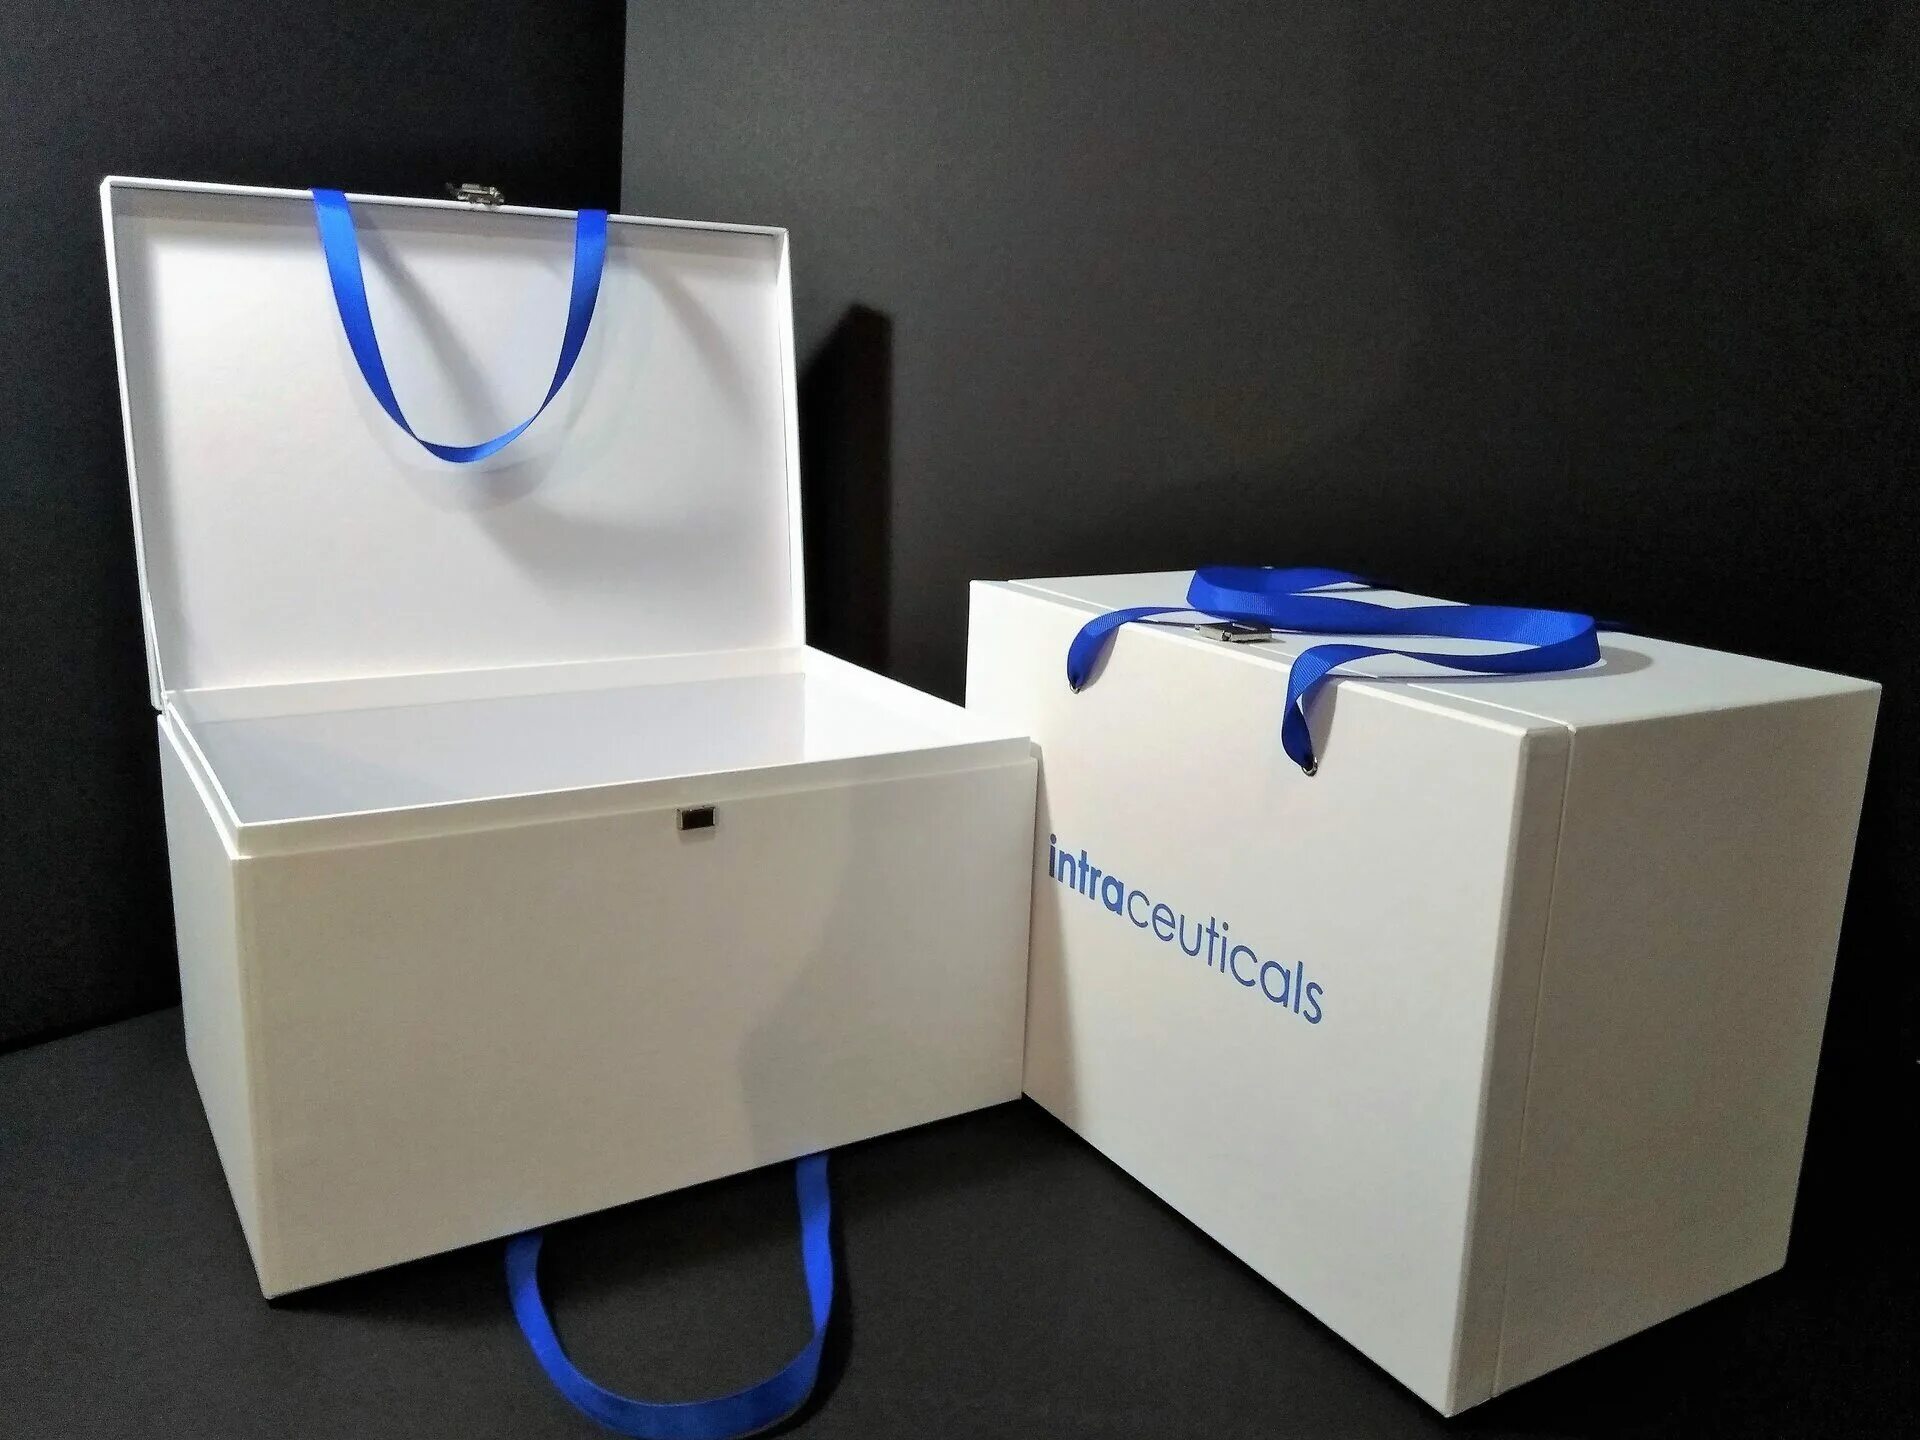 Купить коробку рязань. Коробка с ручками. Подарочная коробка с ручками. Брендированные коробки. Подарочная коробка логотип.